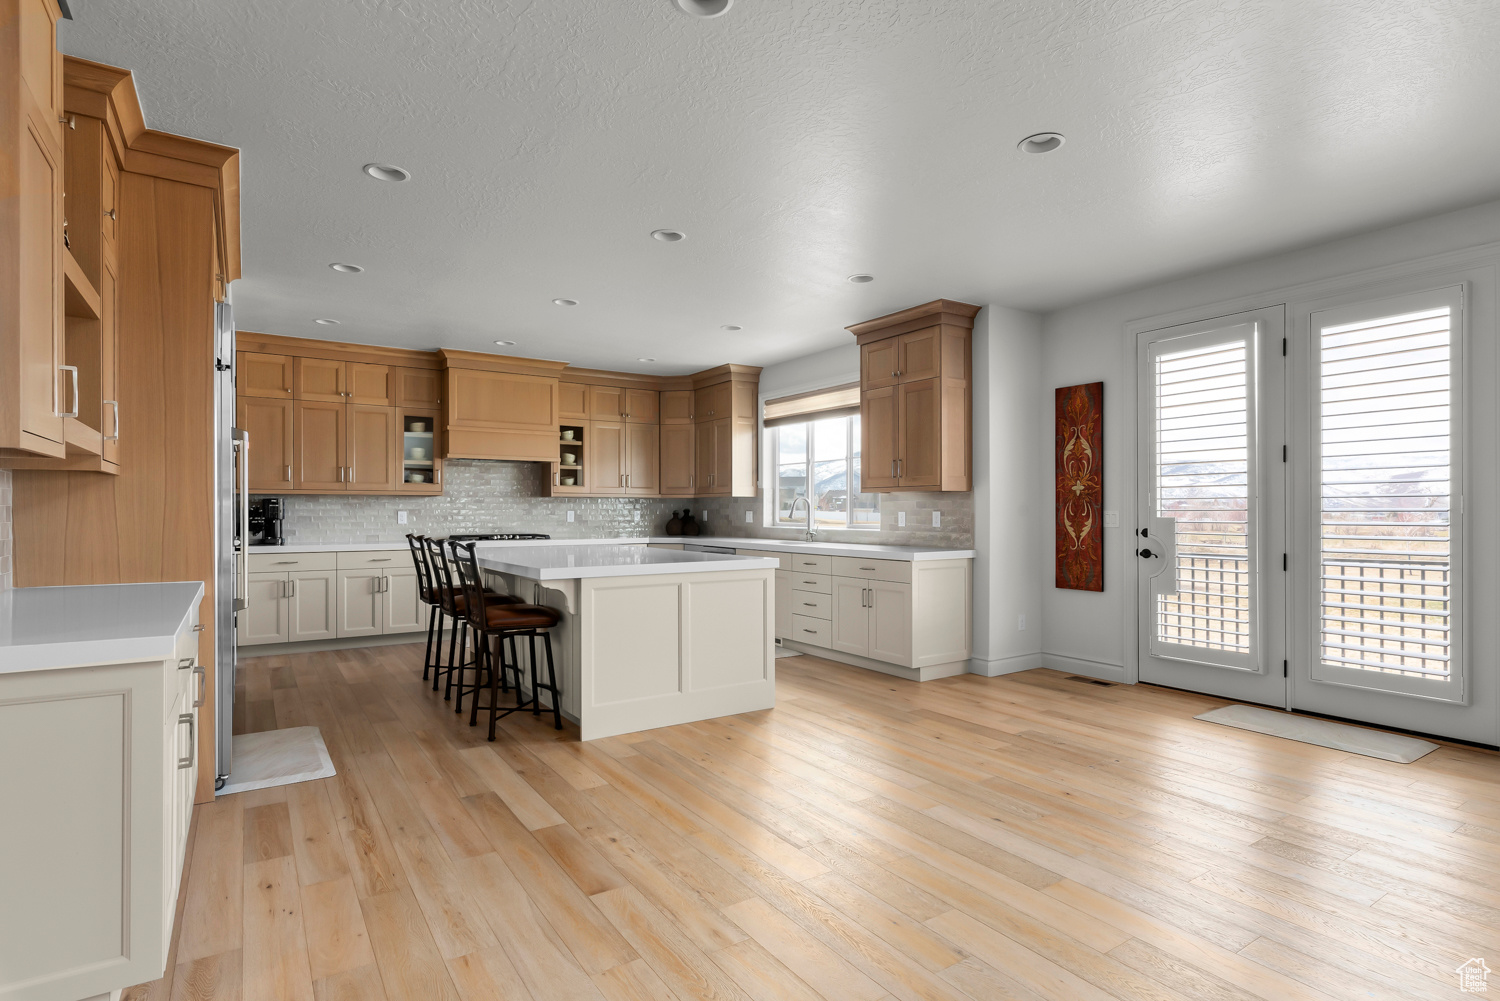 Kitchen with a large island, light hardwood / wood-style floors, tasteful tile backsplash, premium range hood, and built-in appliances. Double Oven, walk-in pantry.